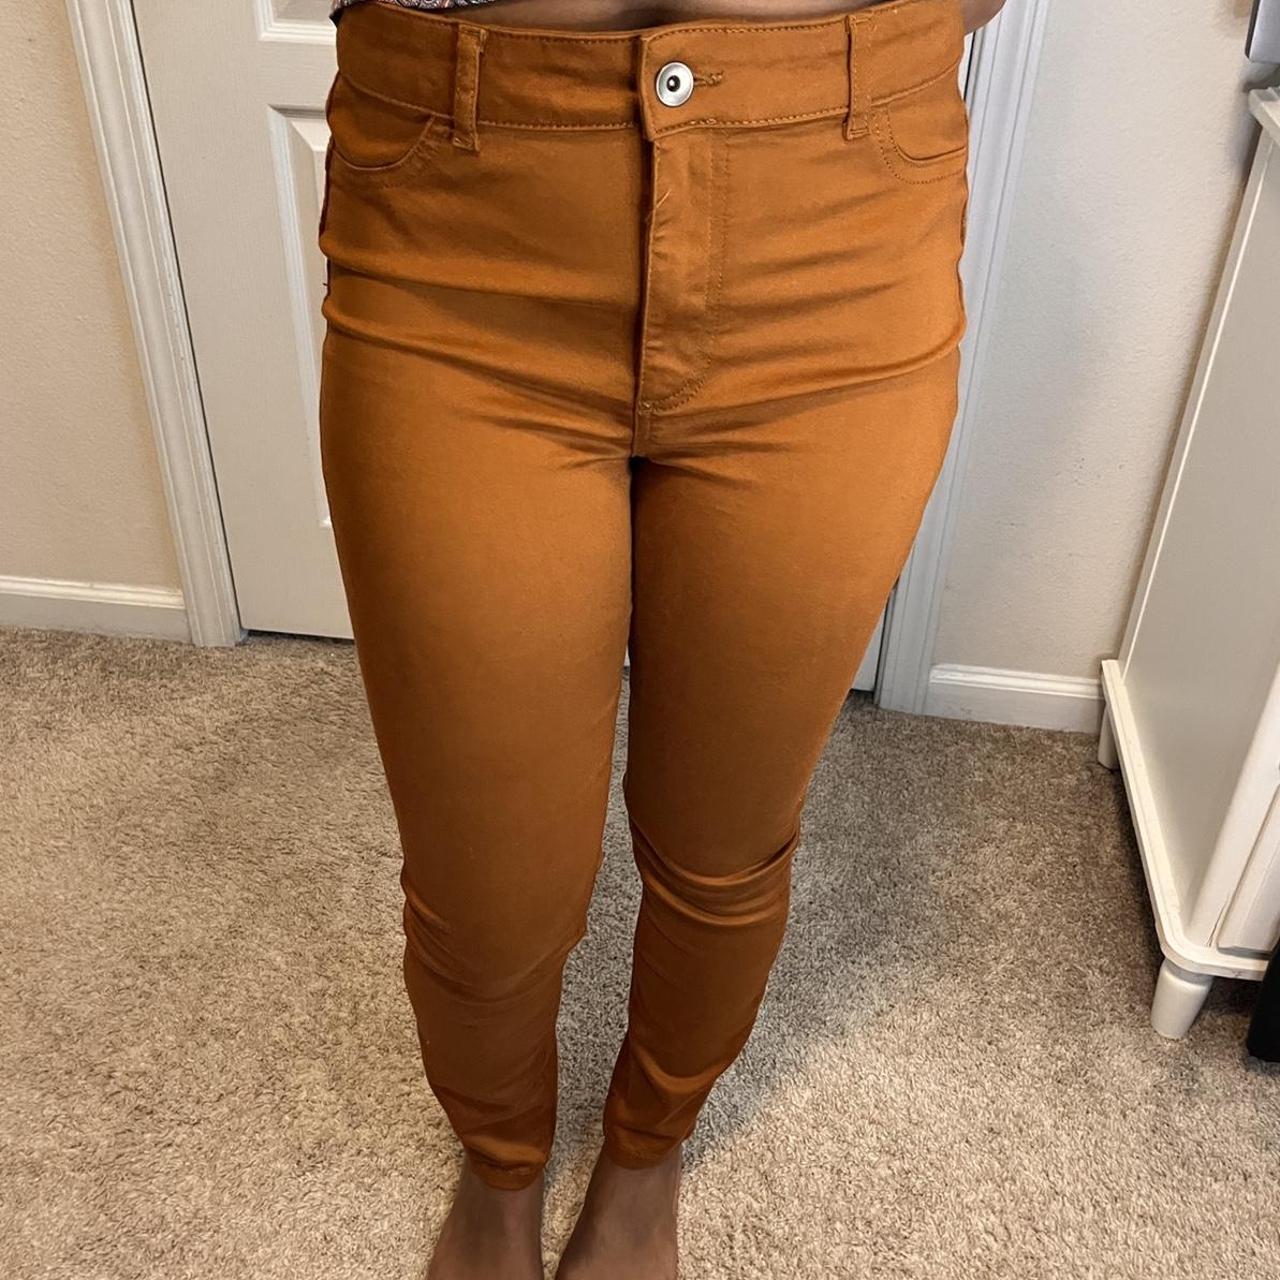 Calzedonia Women's Orange Trousers